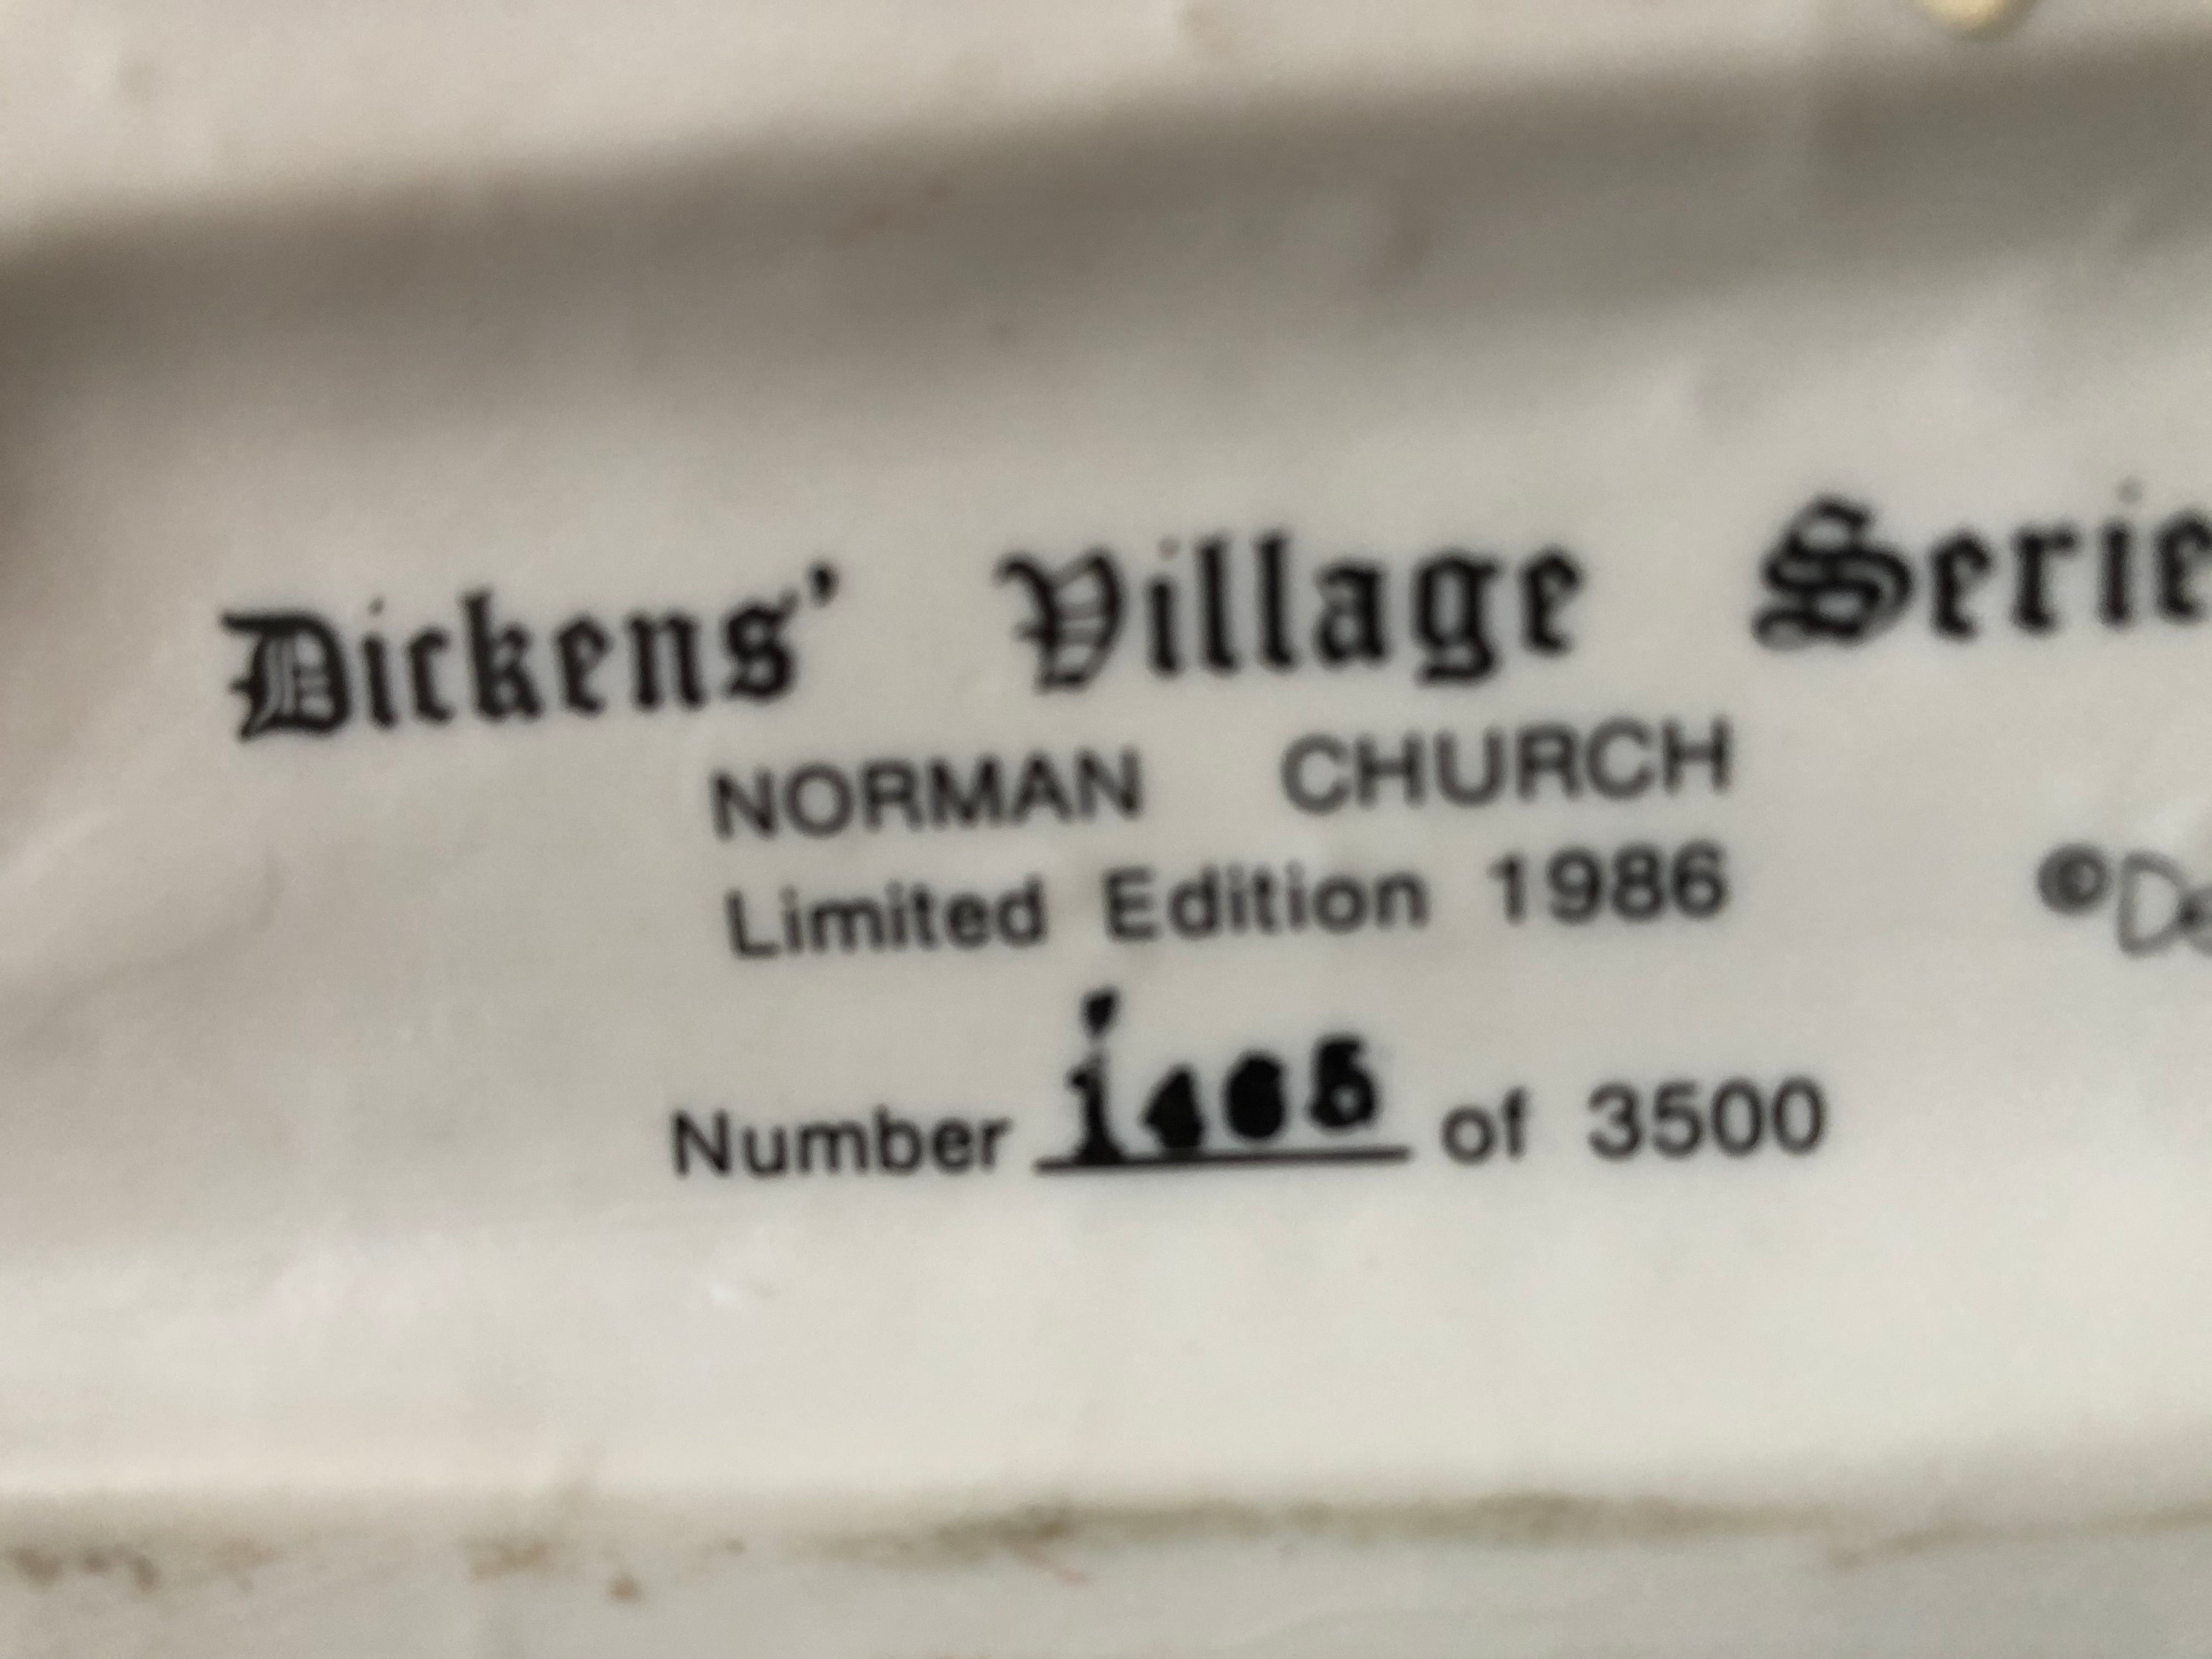 Norman Church #1,465 of 3,500